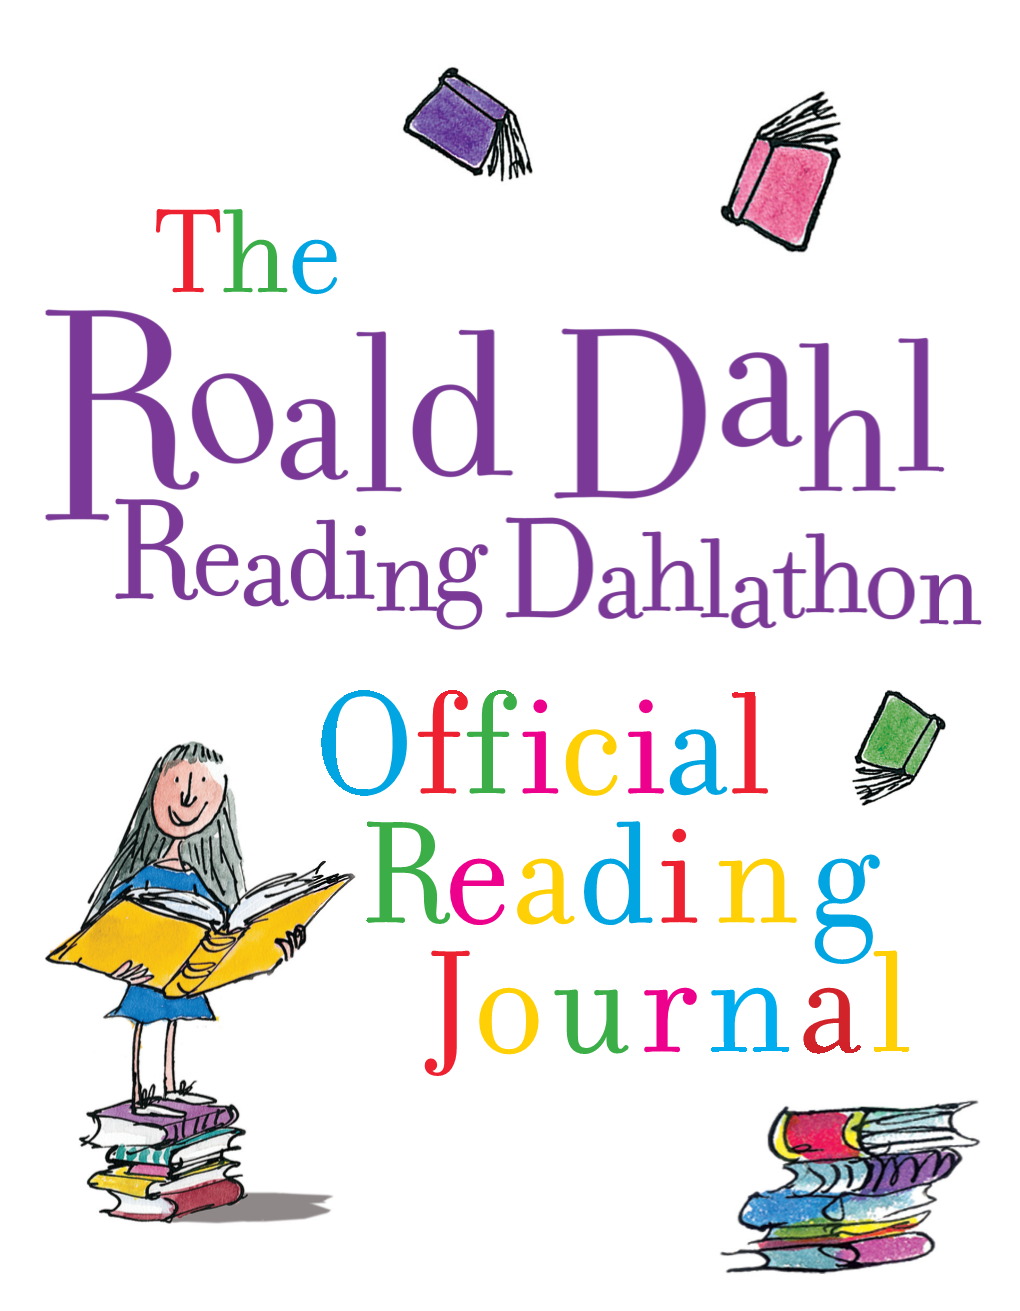 Roald Dahl Reading Dahlathon Official